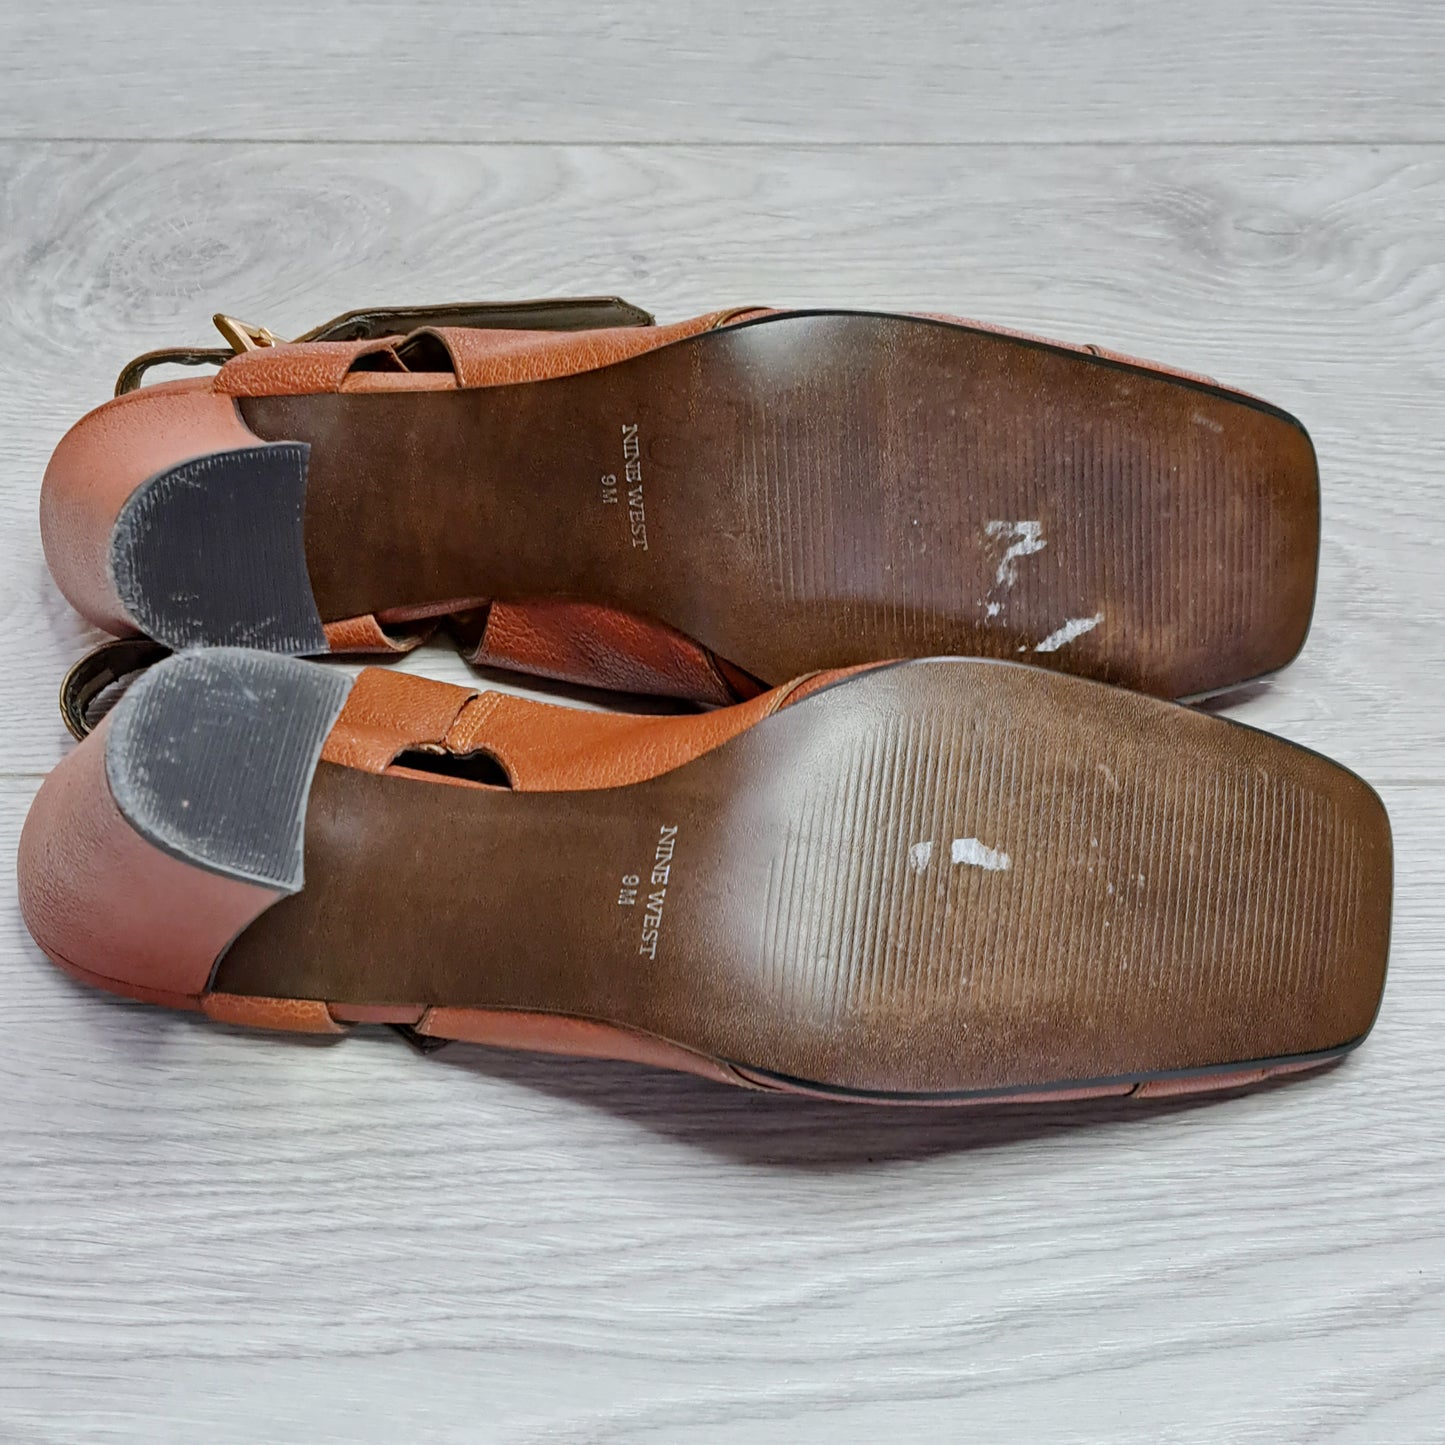 Nine West terracotta leather block heels, size 9M, good condition